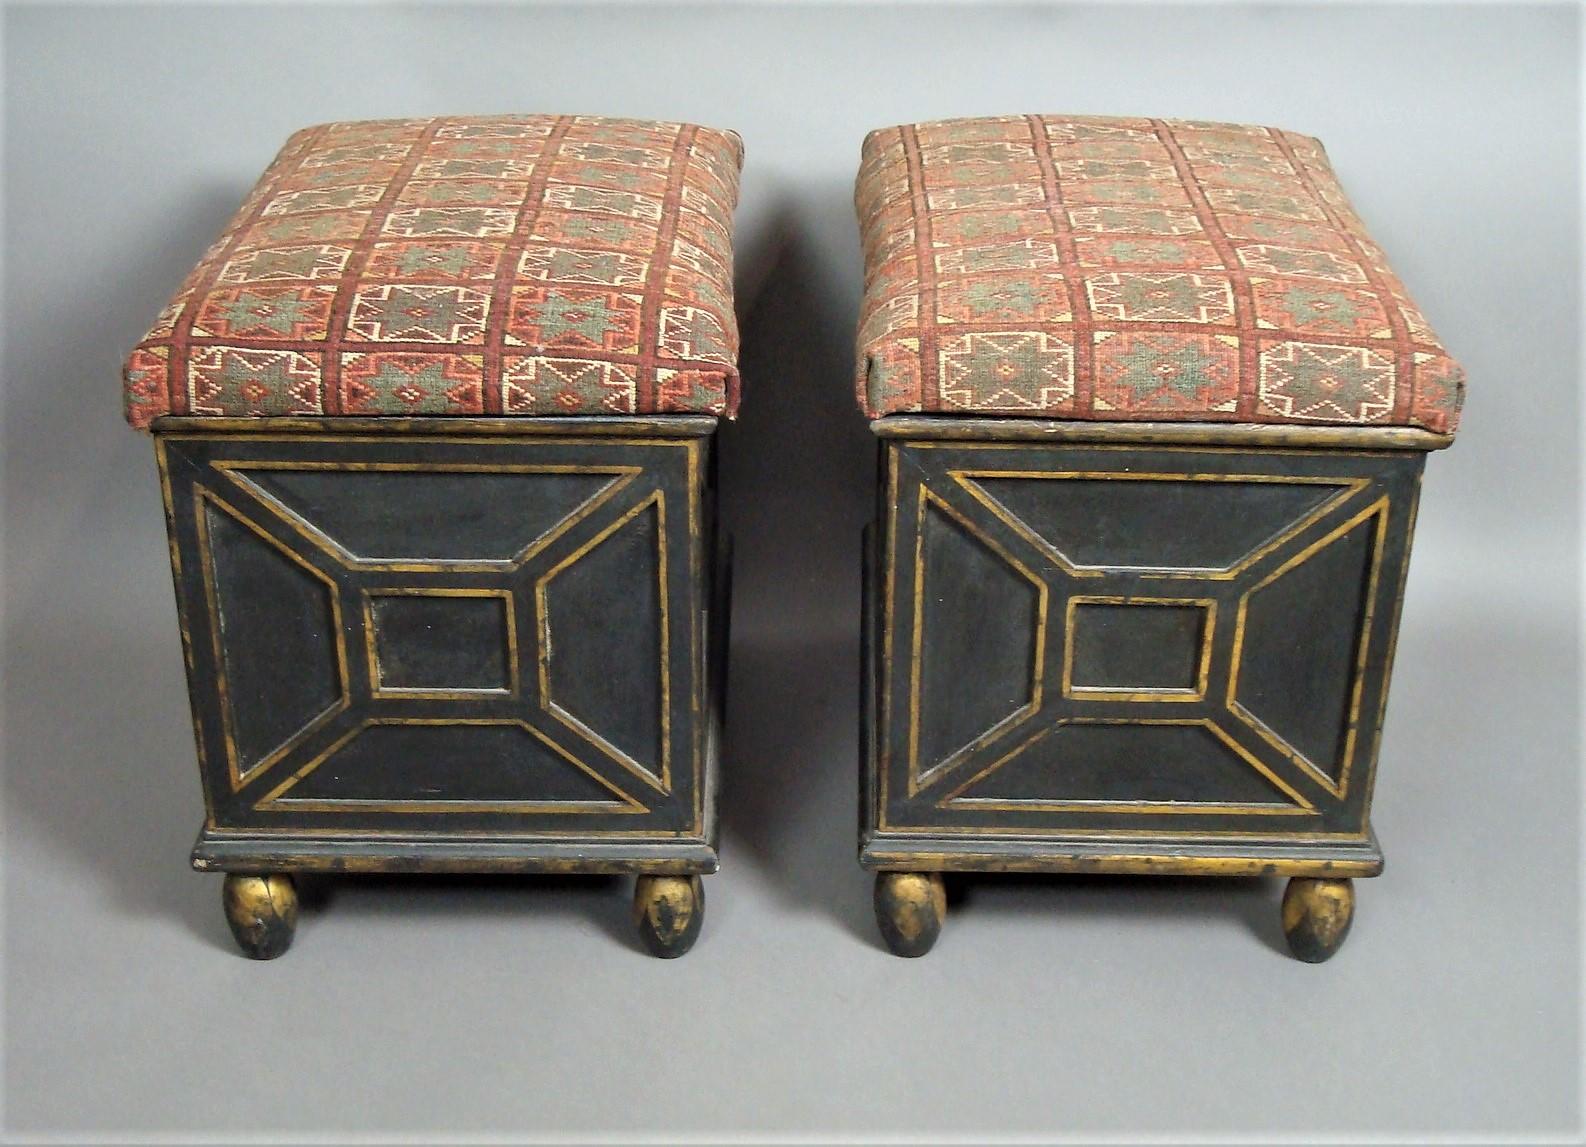 Wood 19th Century Pair of Decorated Box Stools